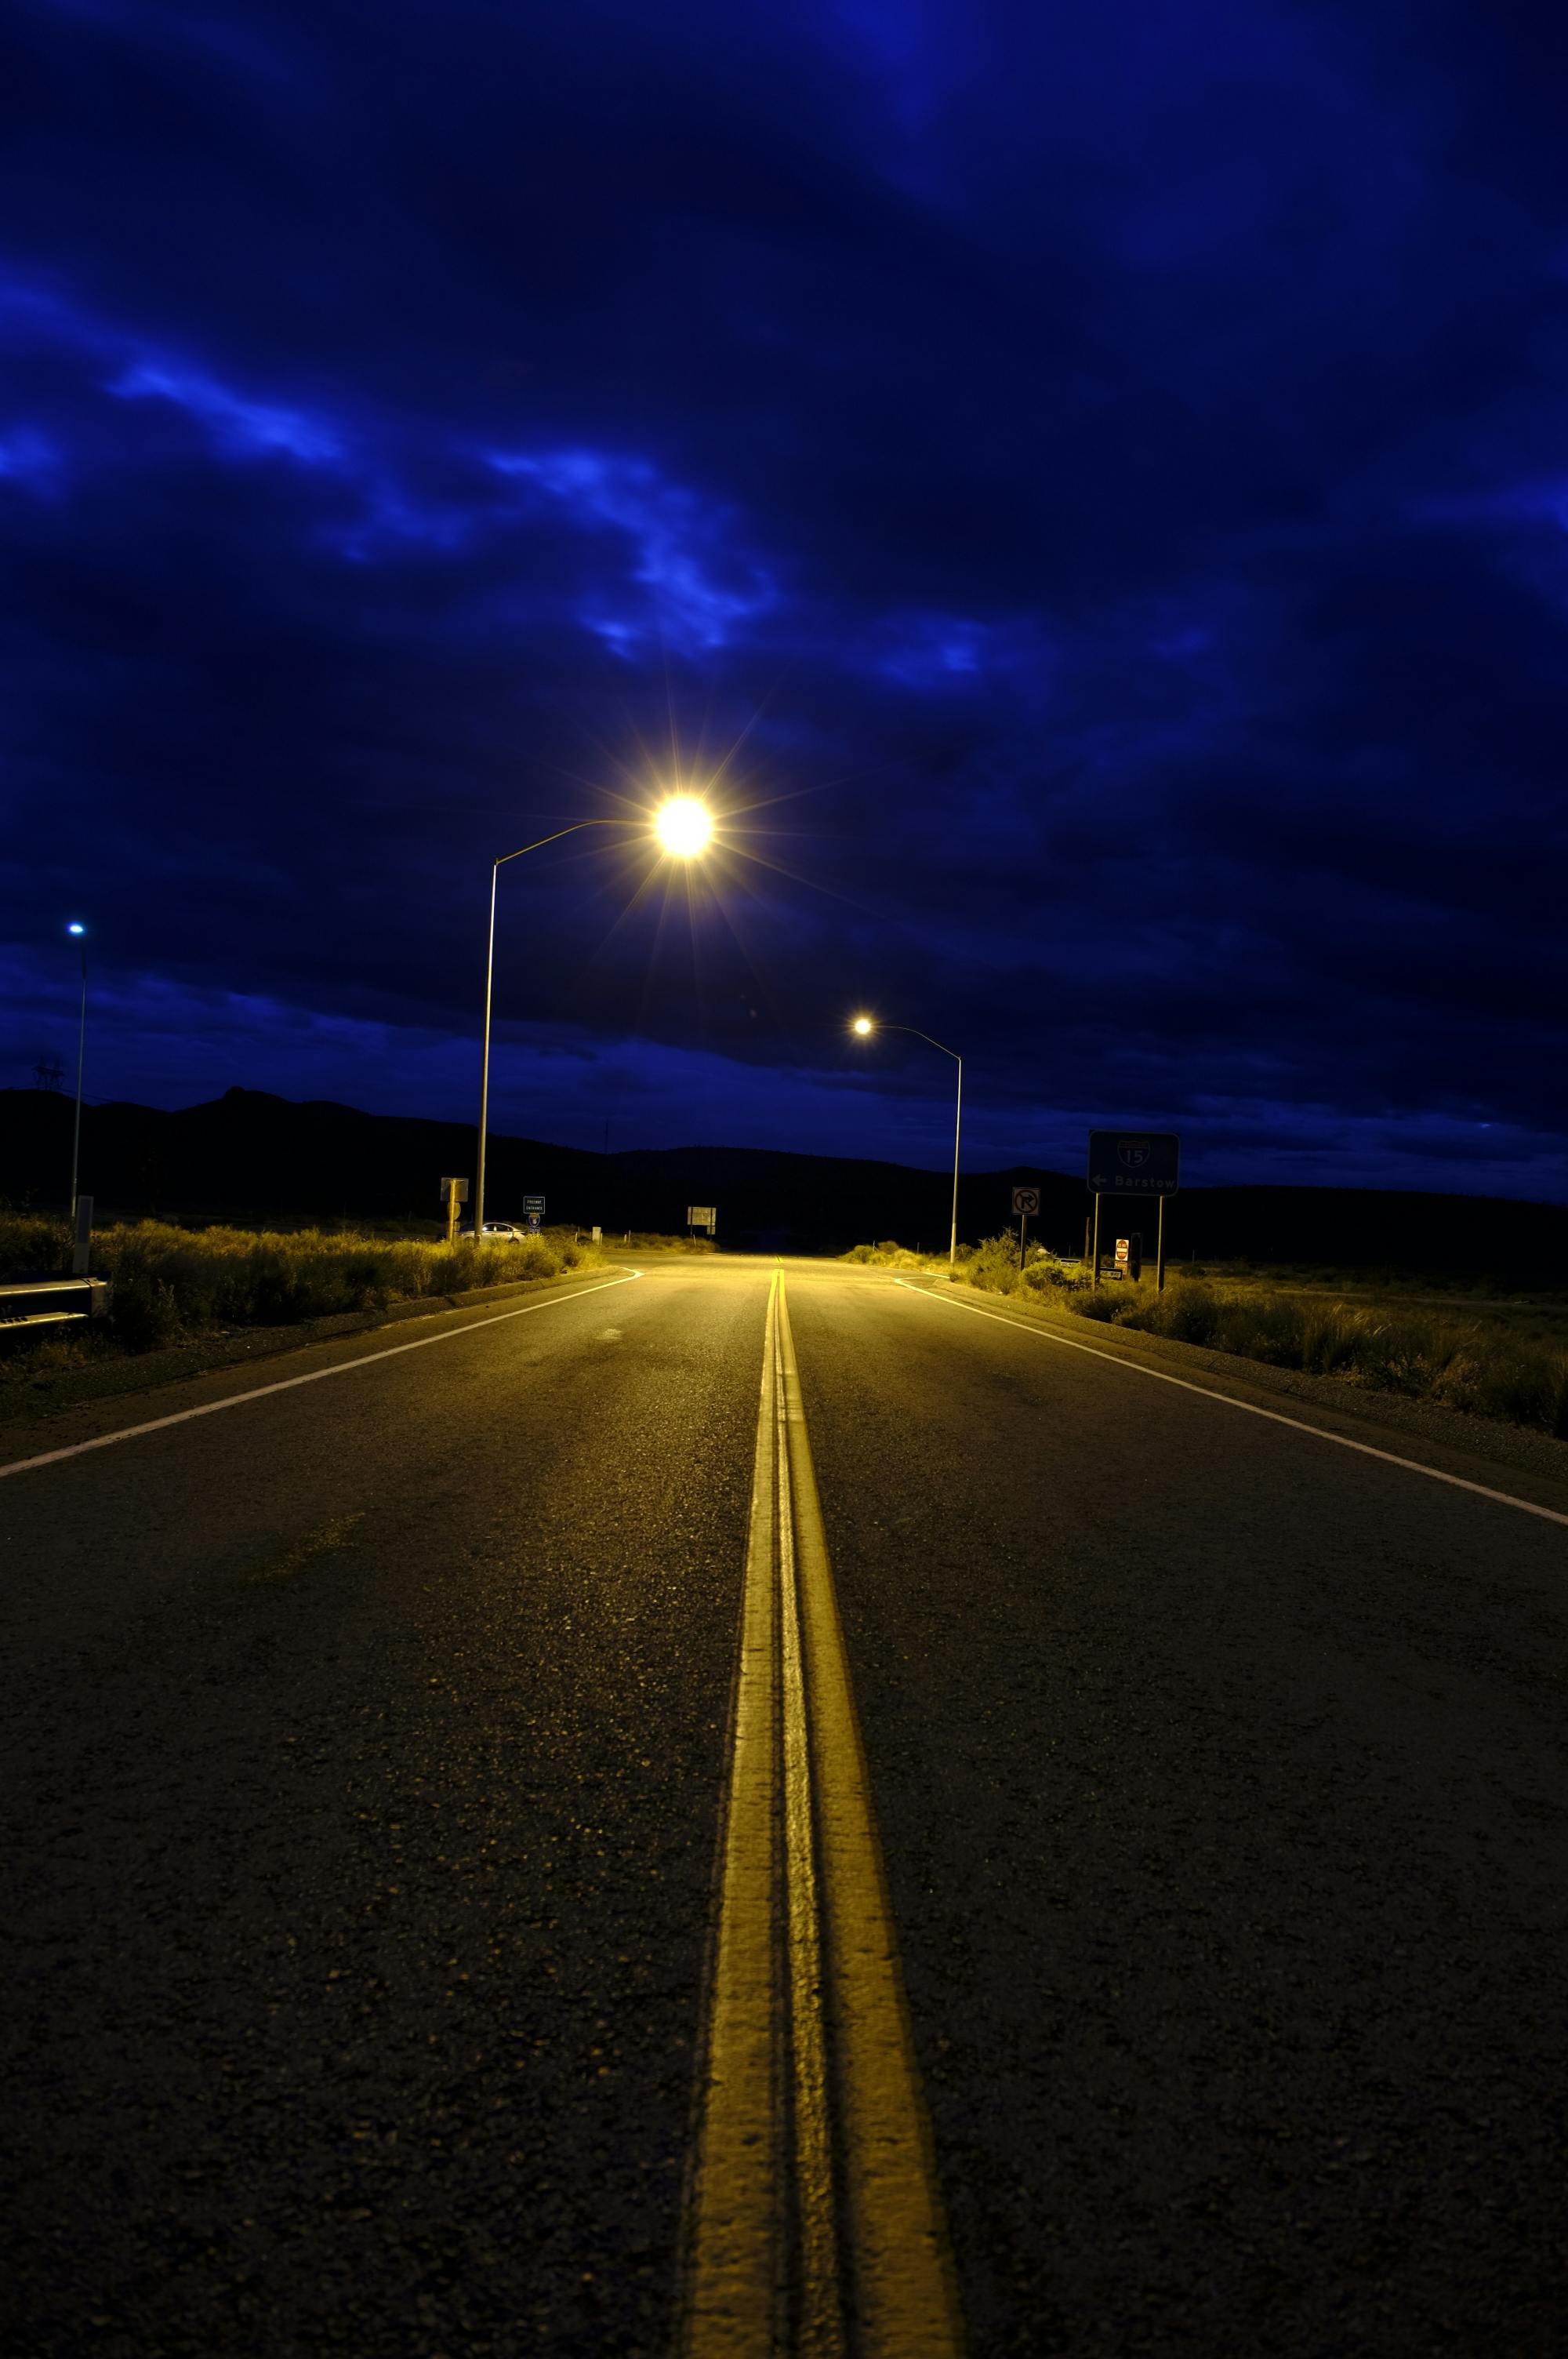 empty street at night